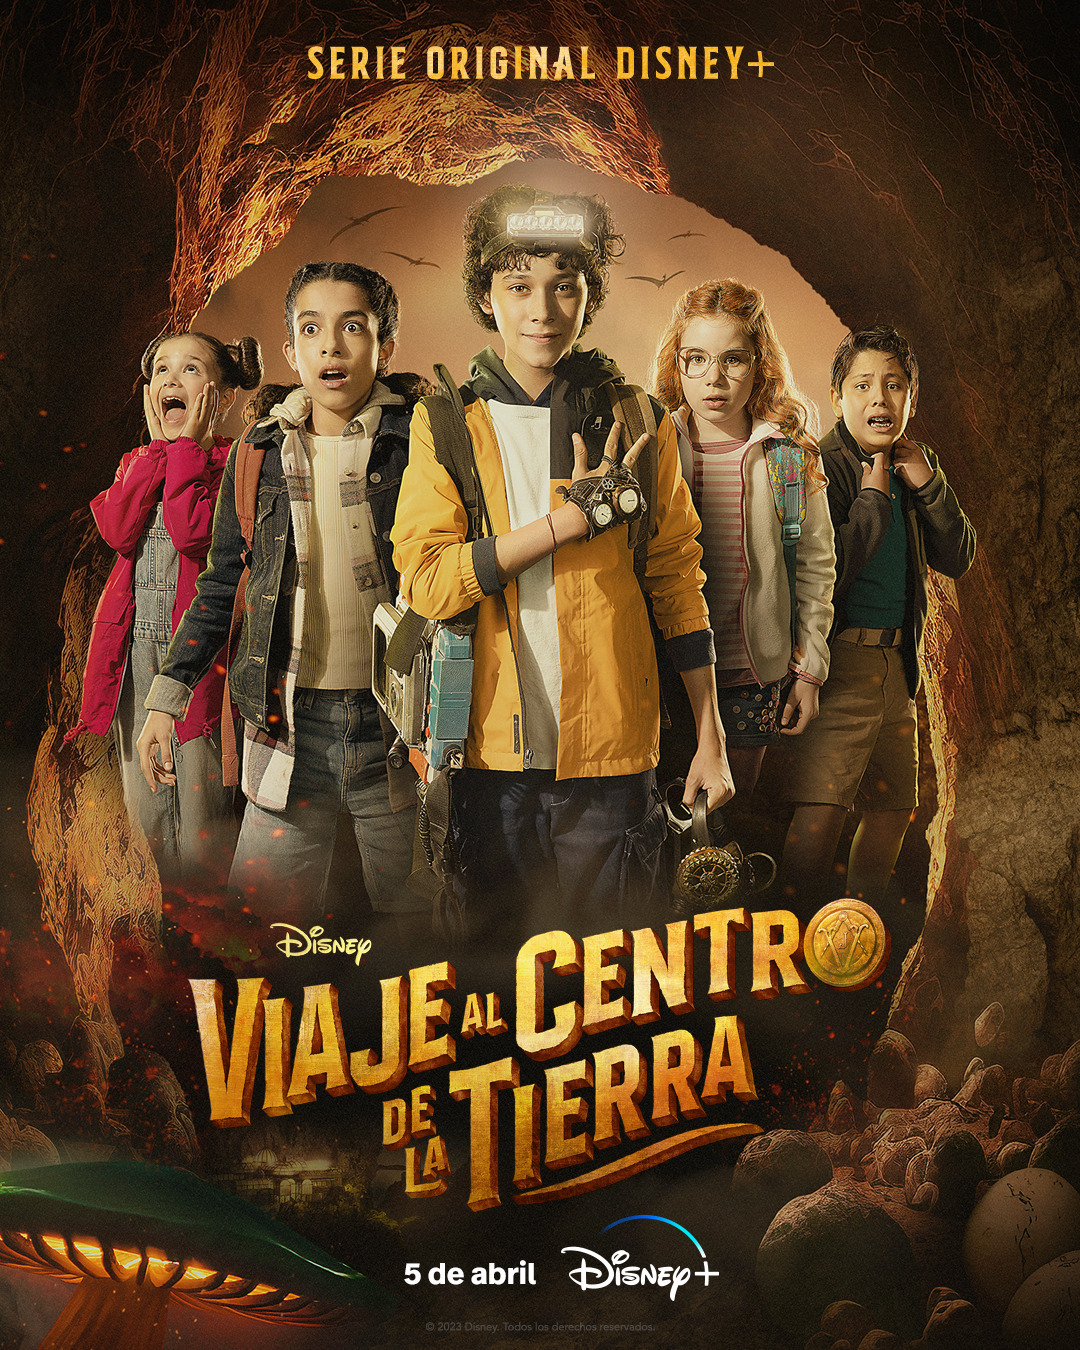 Extra Large TV Poster Image for Viaje al centro de la tierra (#3 of 8)